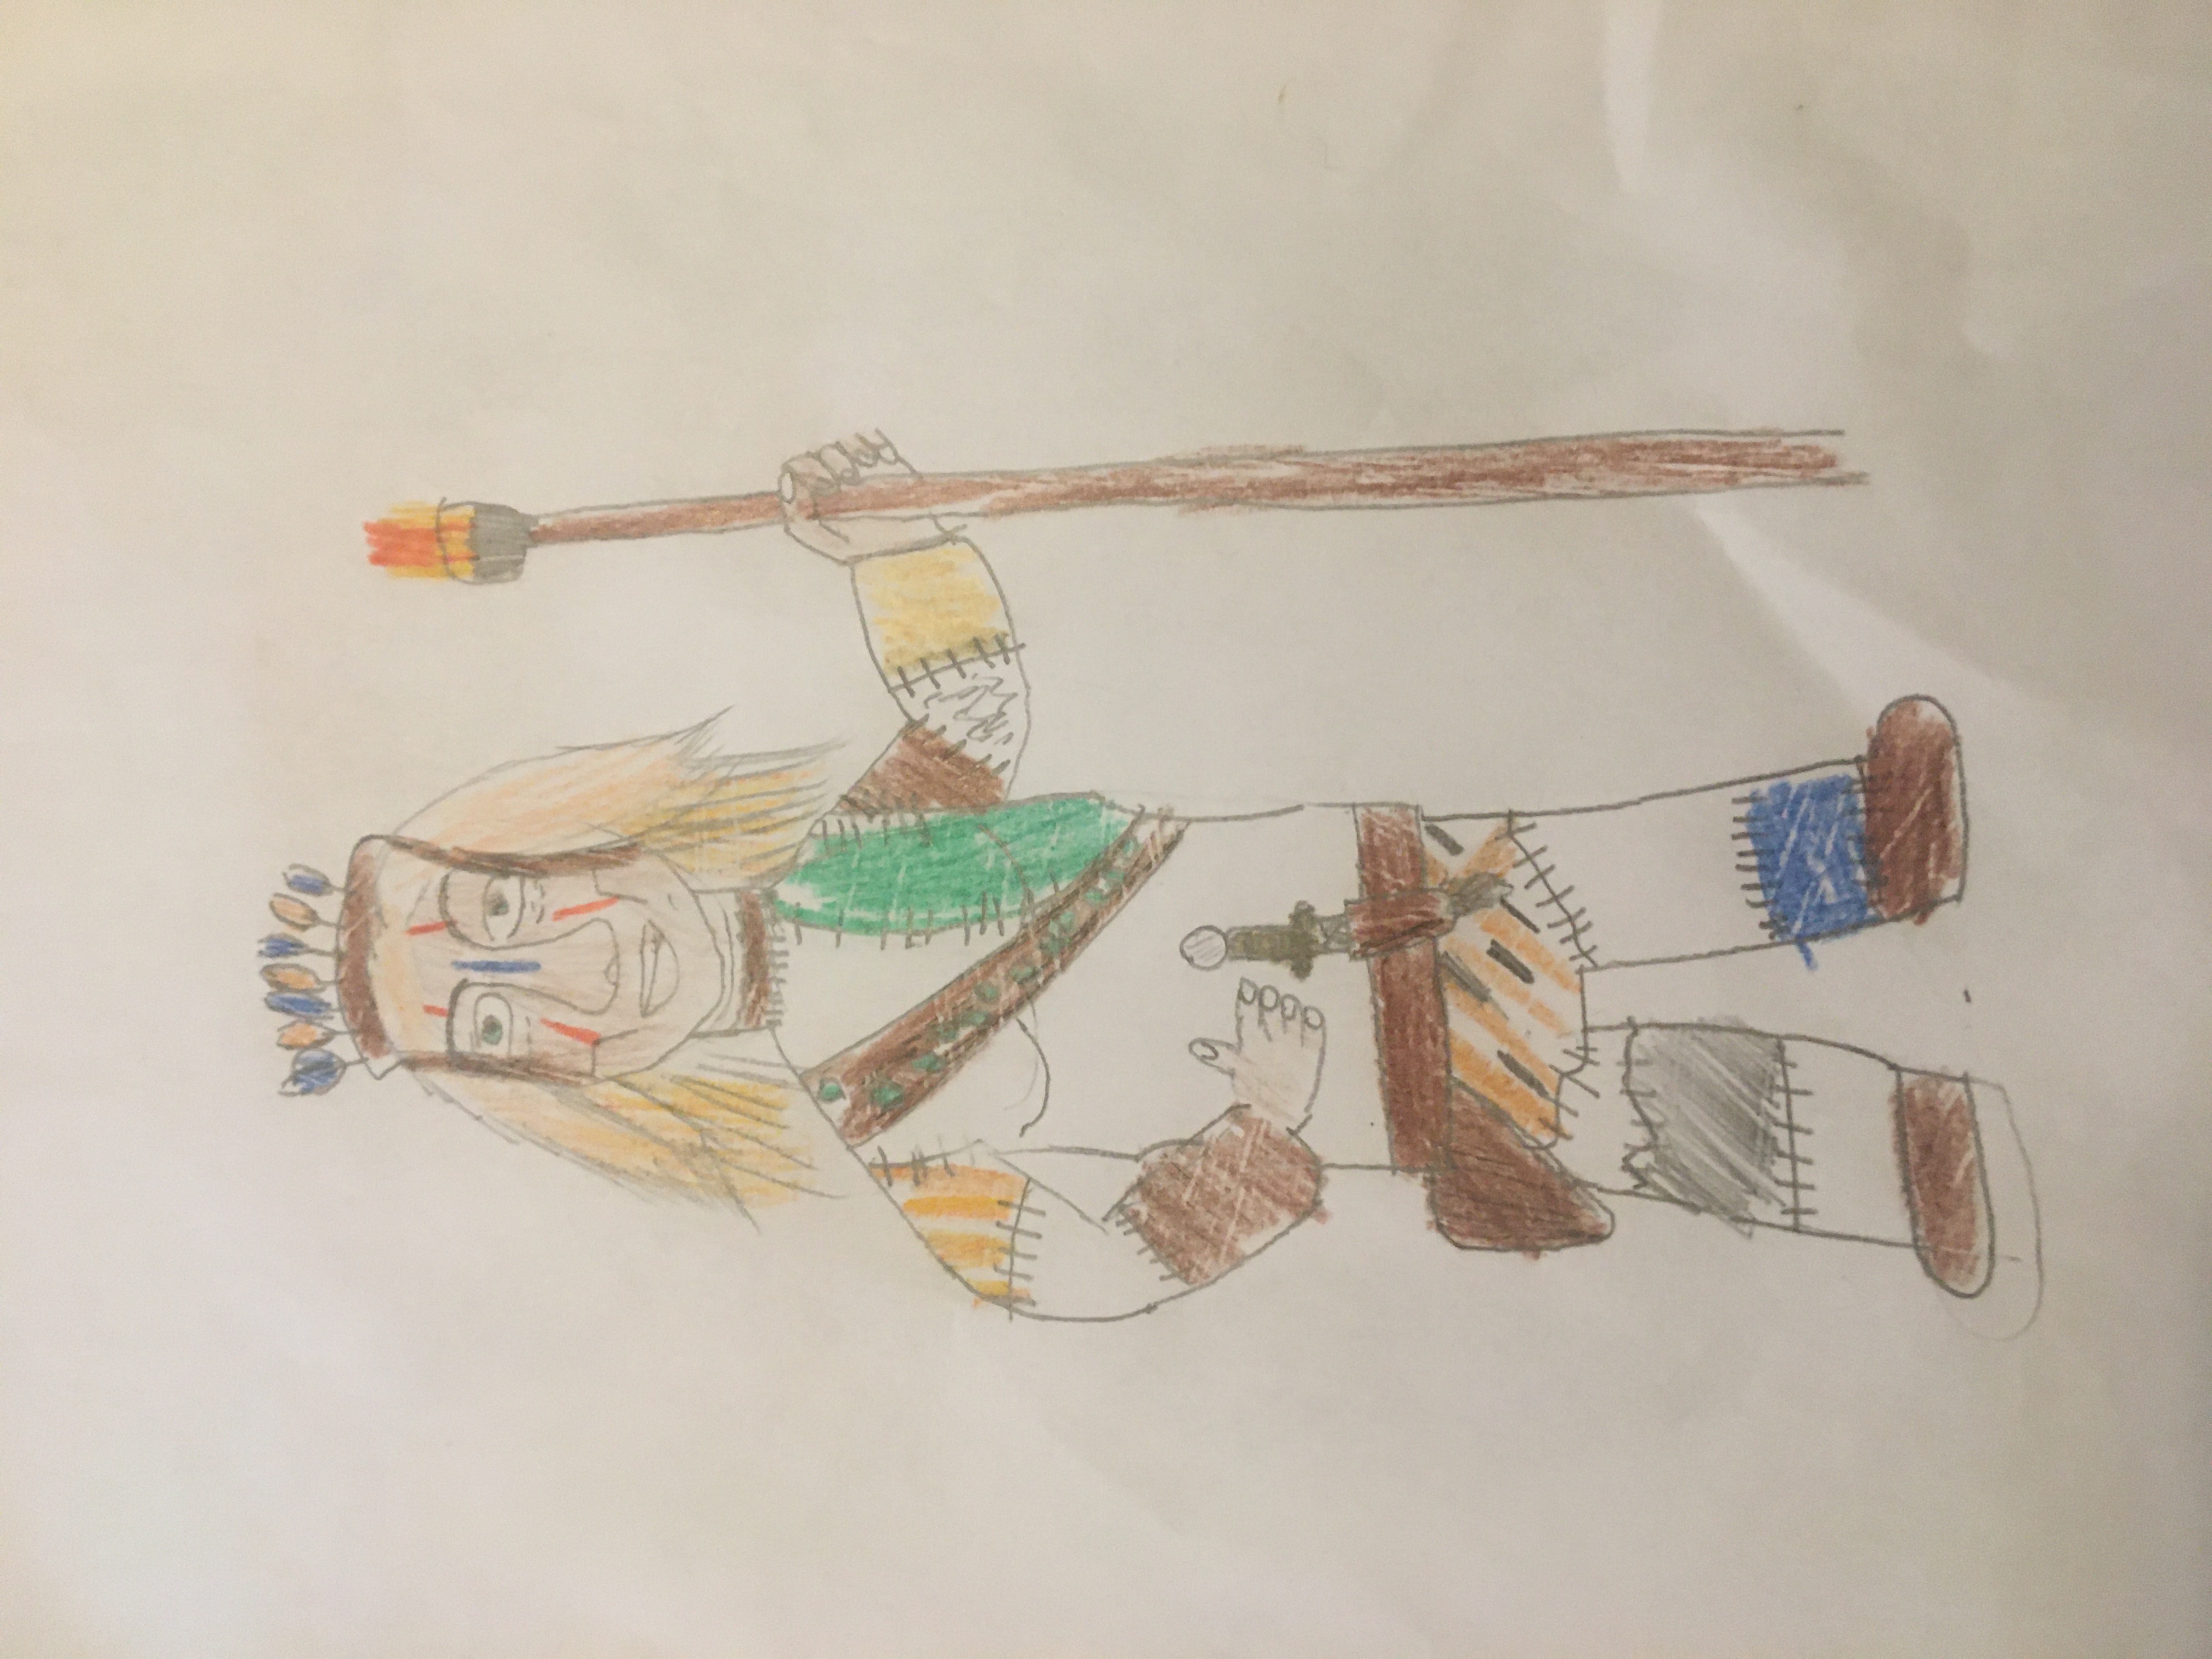 Lego anime warrior chick by Gladiatorbricks on DeviantArt